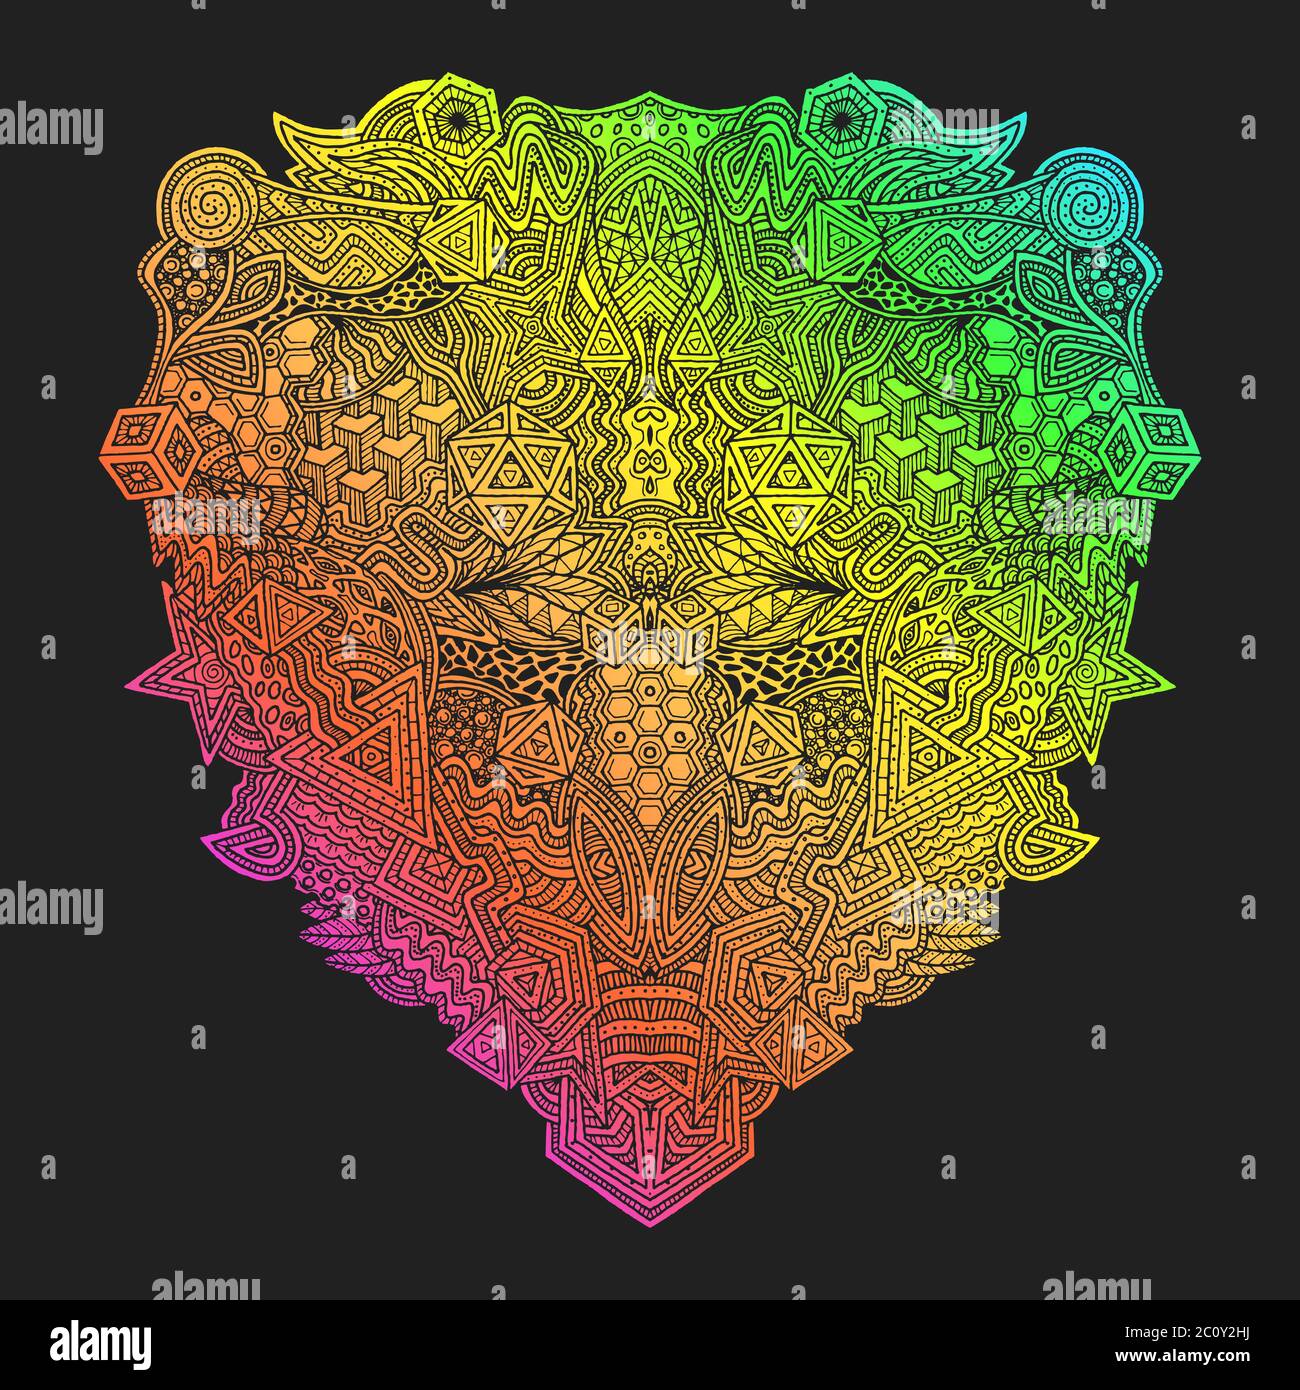 rainbow decorative zentangle illustration Stock Photo